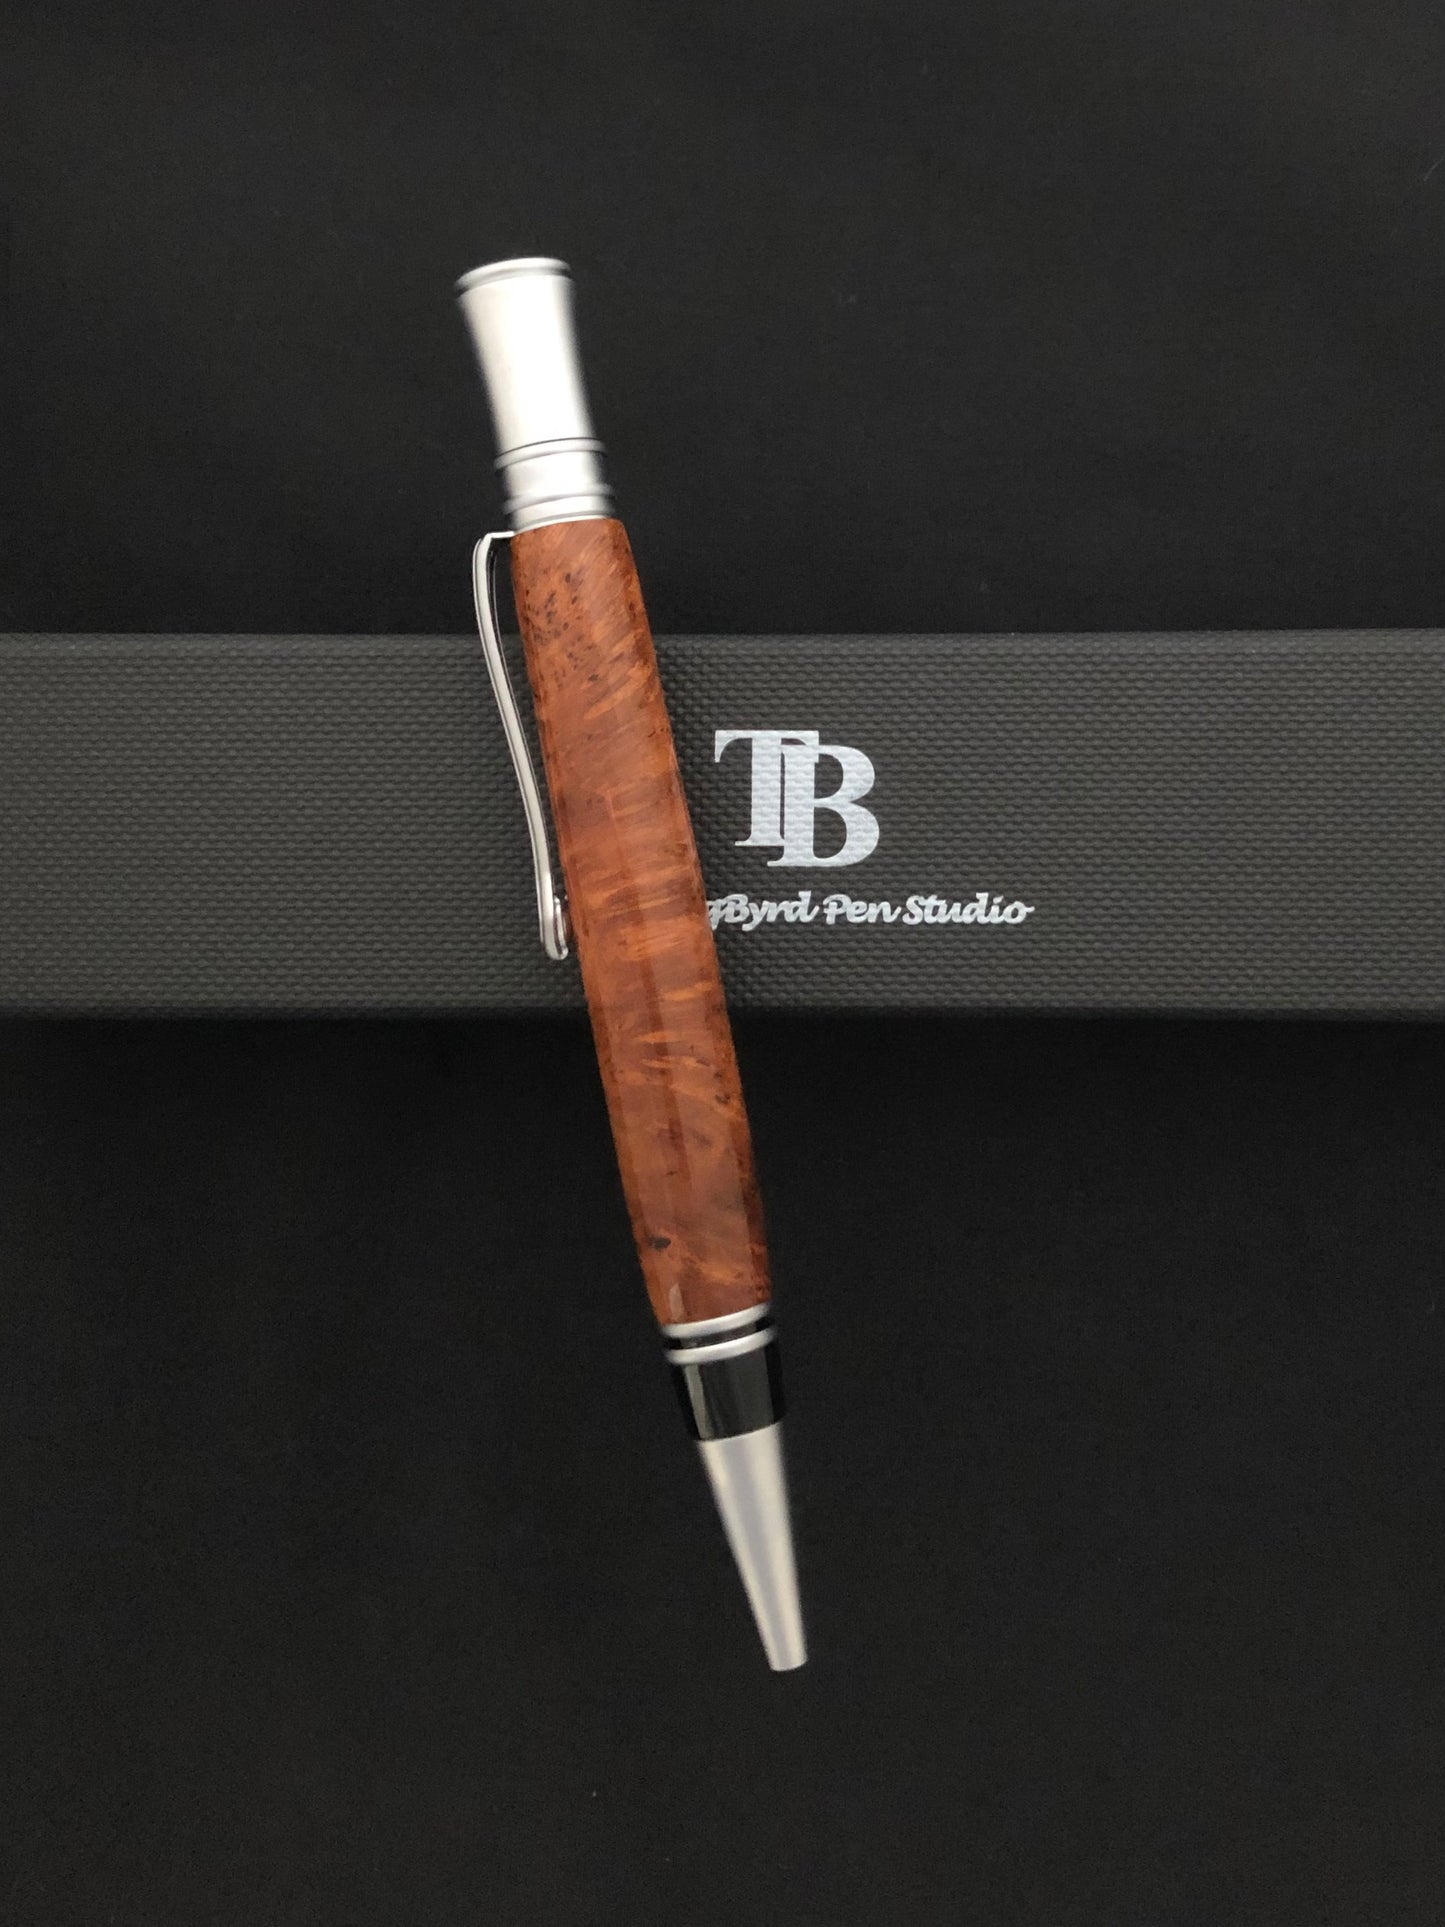 Single barrel twist Ballpoint pen, Cherry Burl body with chrome plating